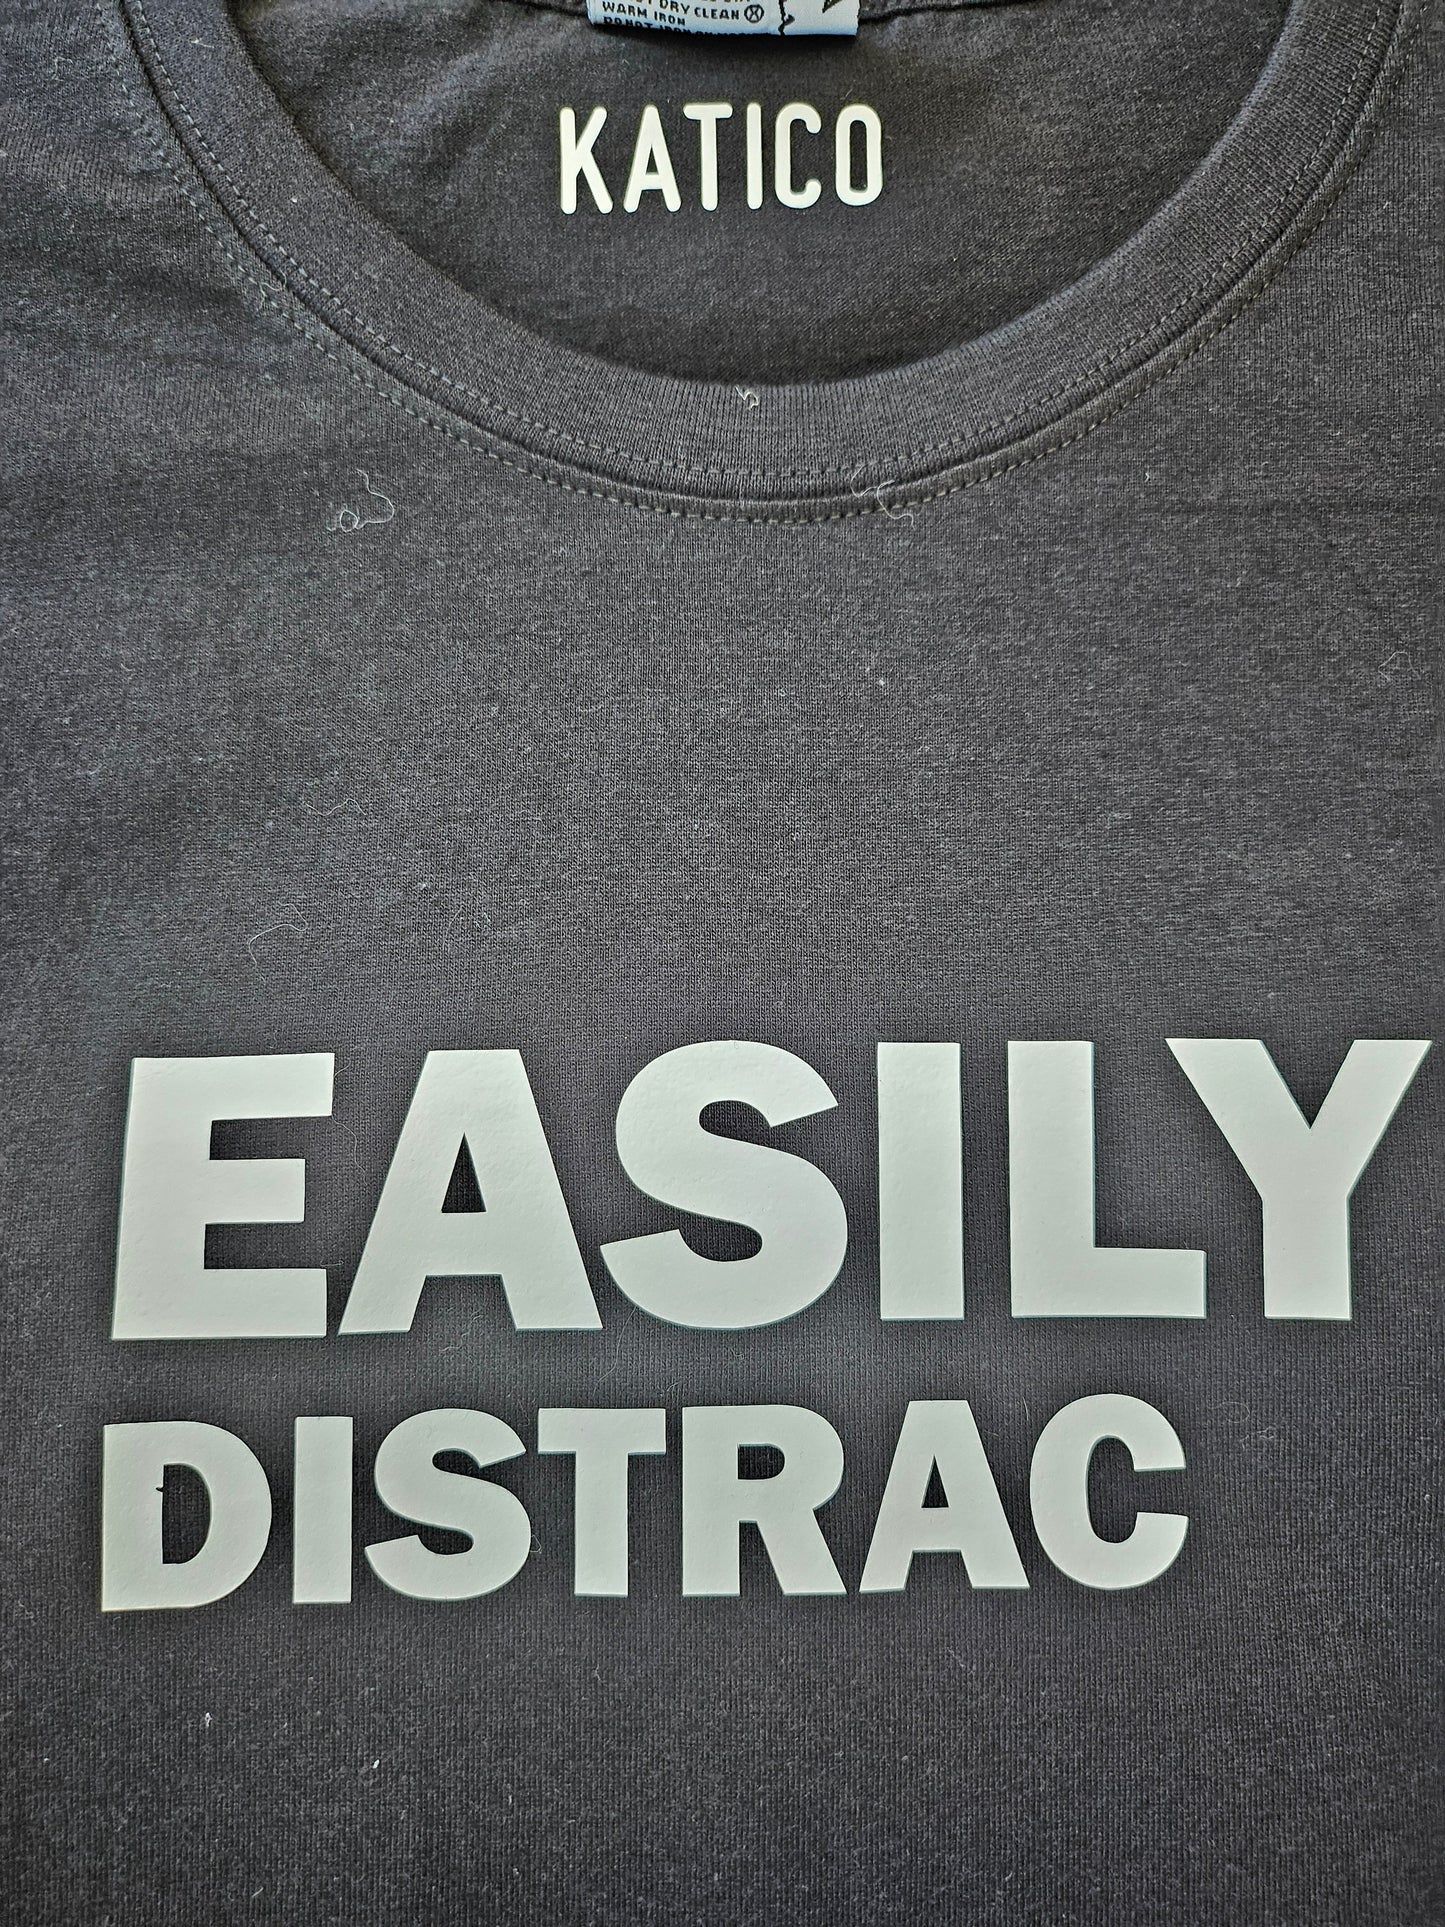 Easily Distrac T-shirt - Katico